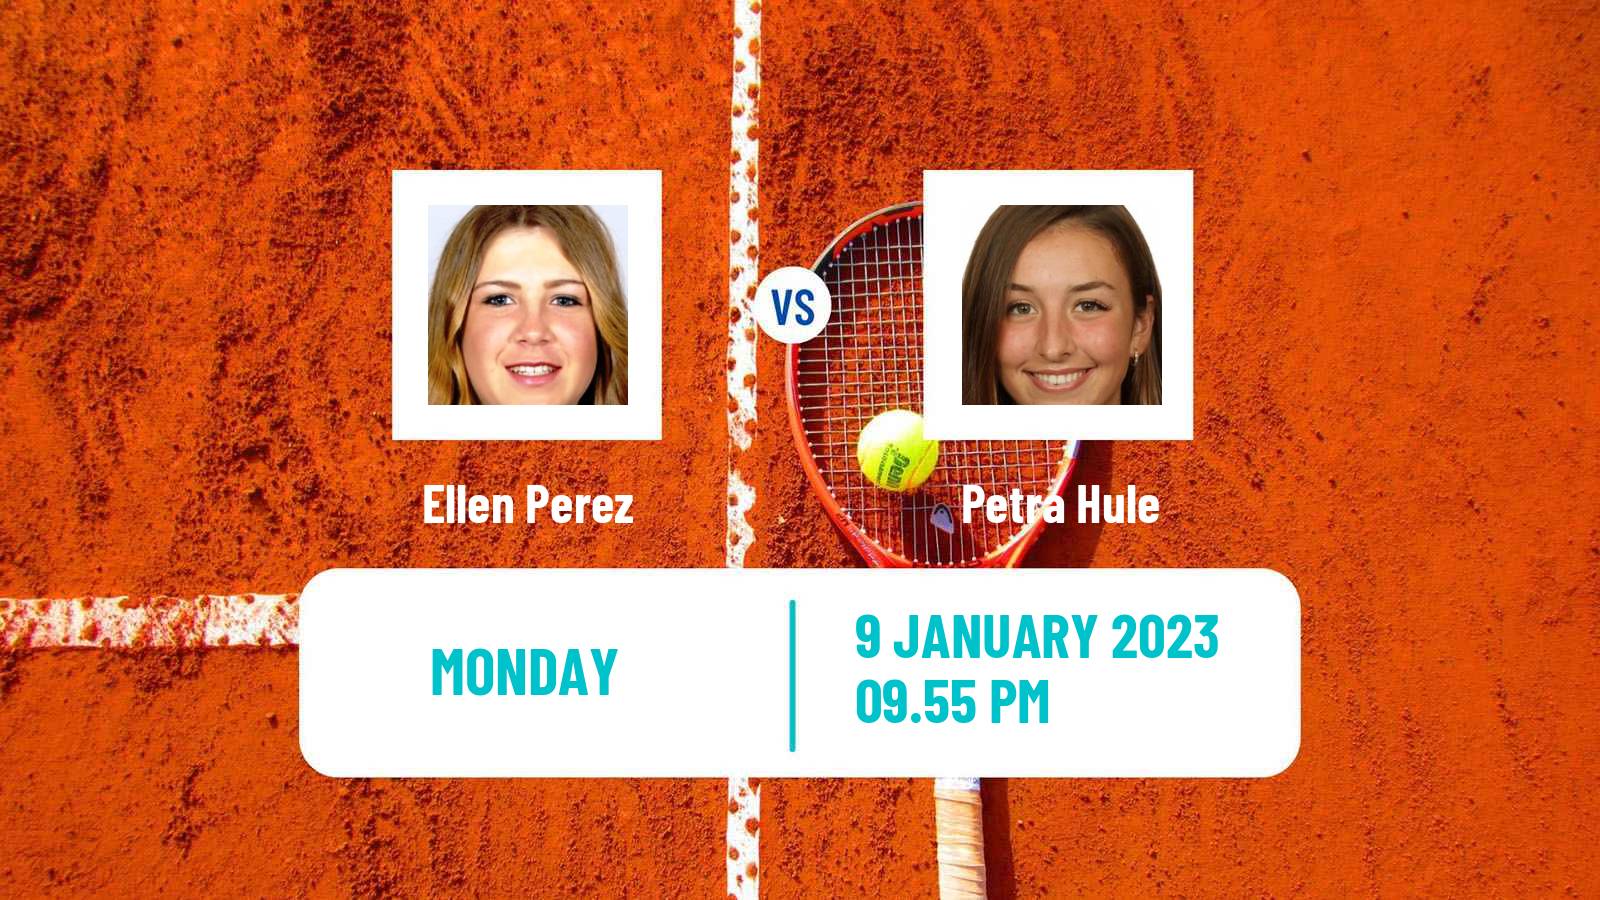 Tennis WTA Australian Open Ellen Perez - Petra Hule